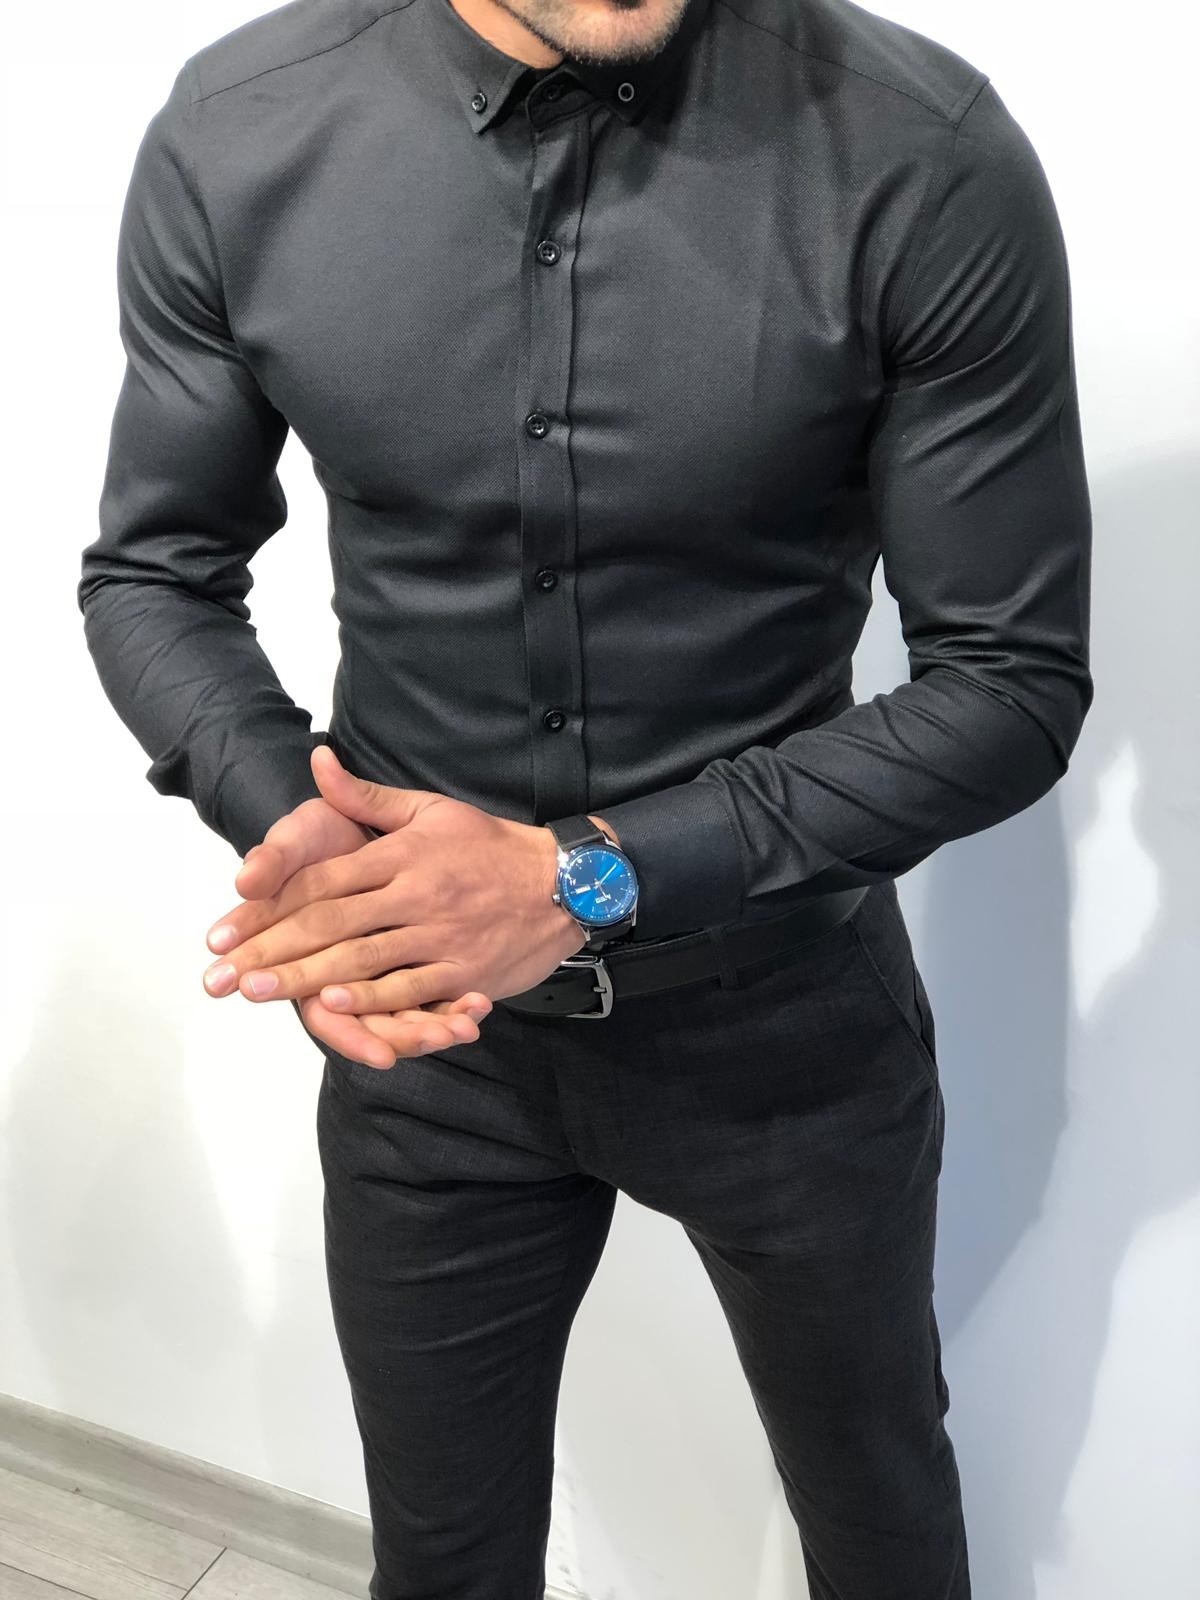 How to Wear a Mens Black Dress Shirt  Suits Expert